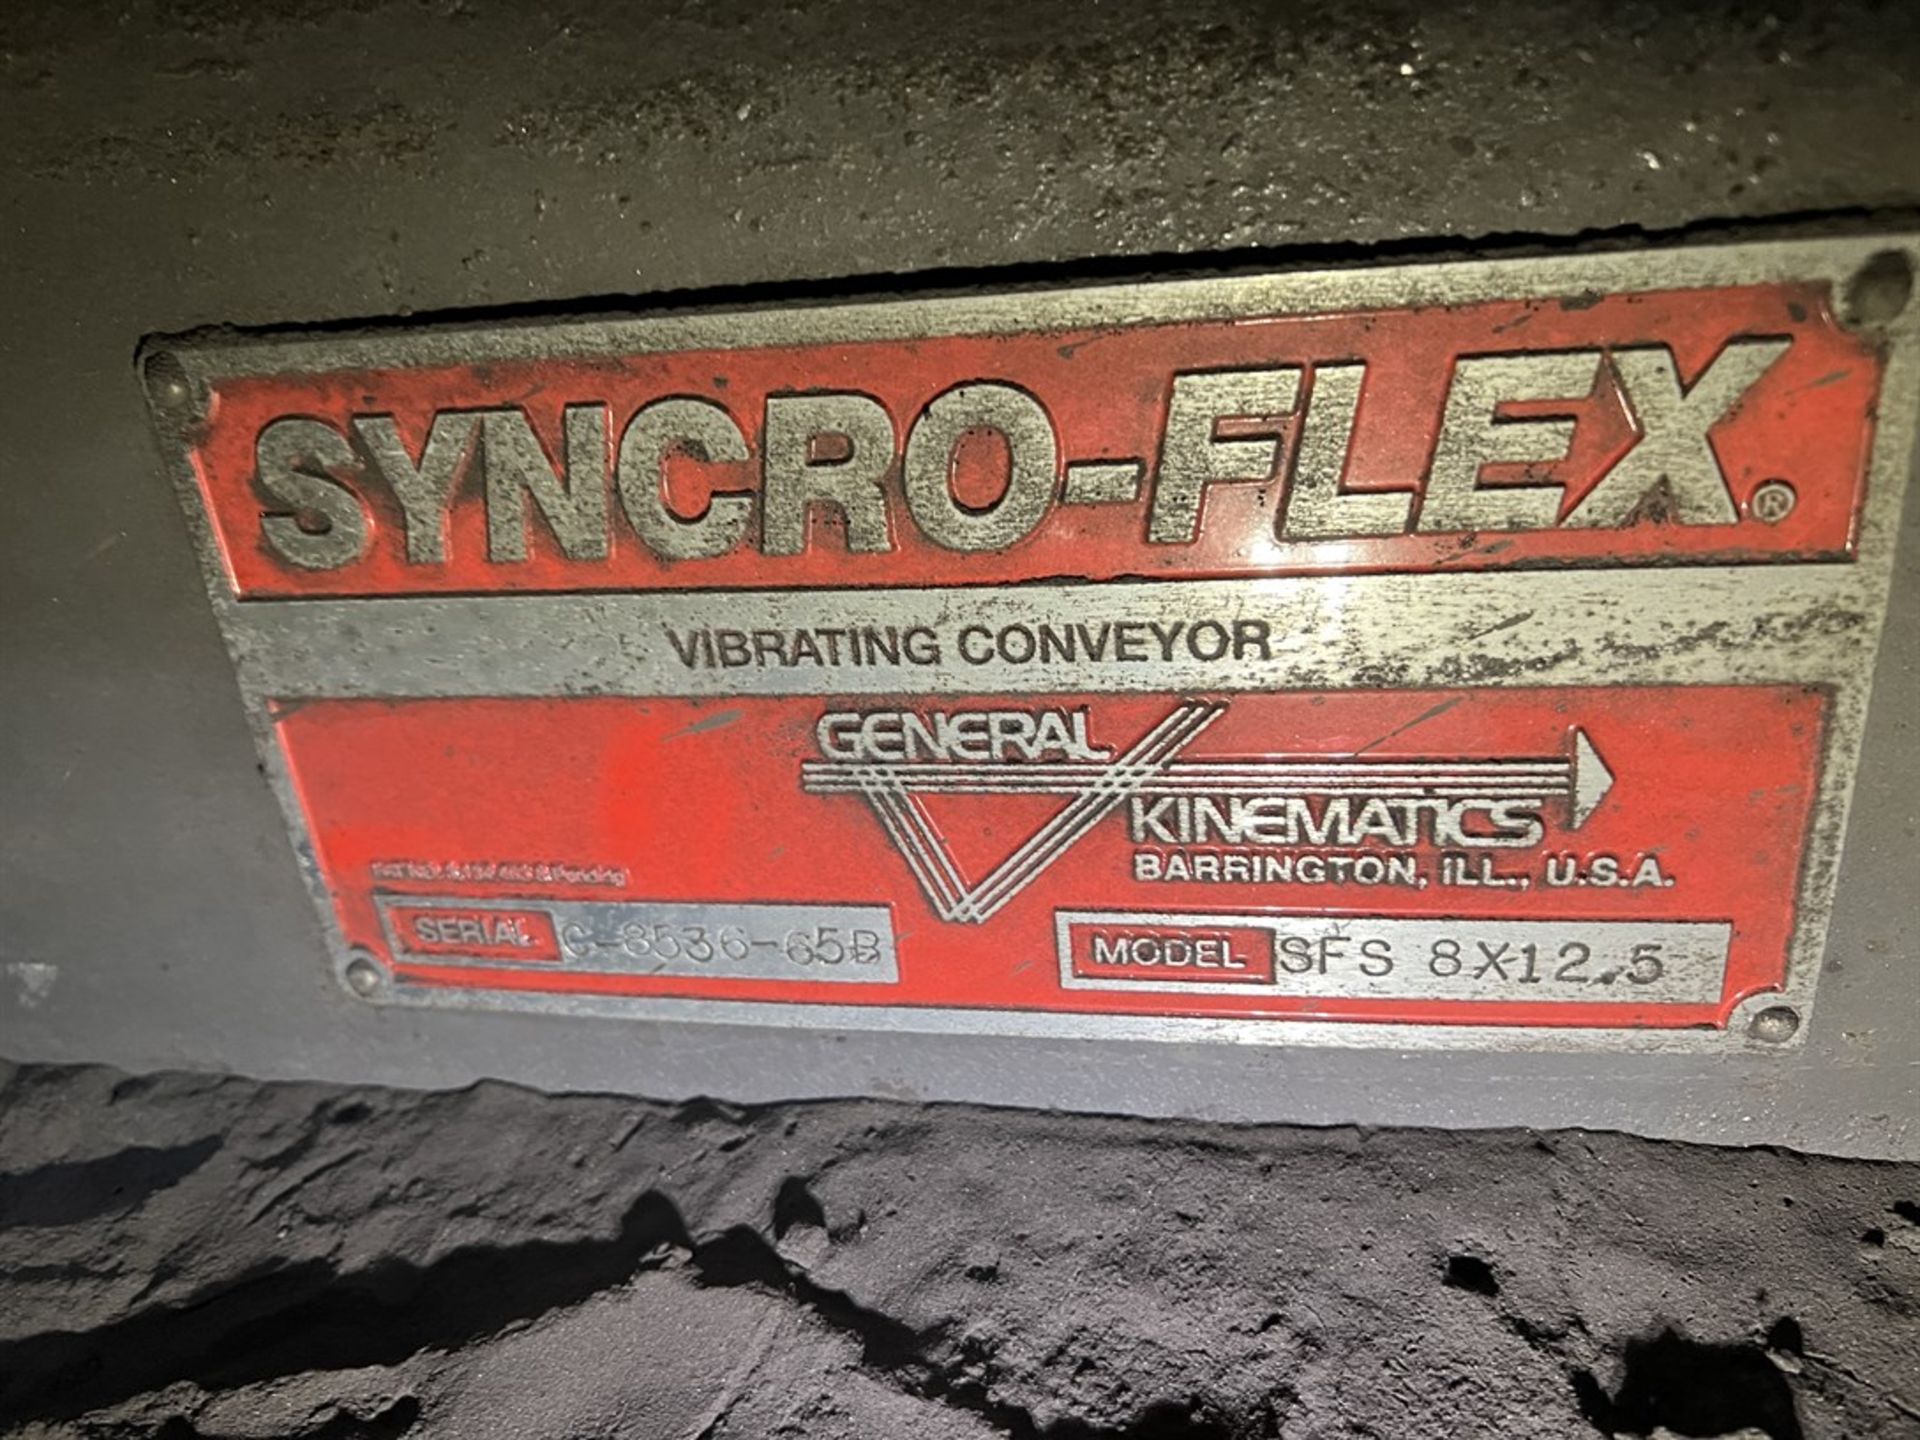 GENERAL KINEMATICS Syncro-Flex SFS 8X12.5 Vibrating Tube Conveyor, s/n C-8536-65B - Image 4 of 4